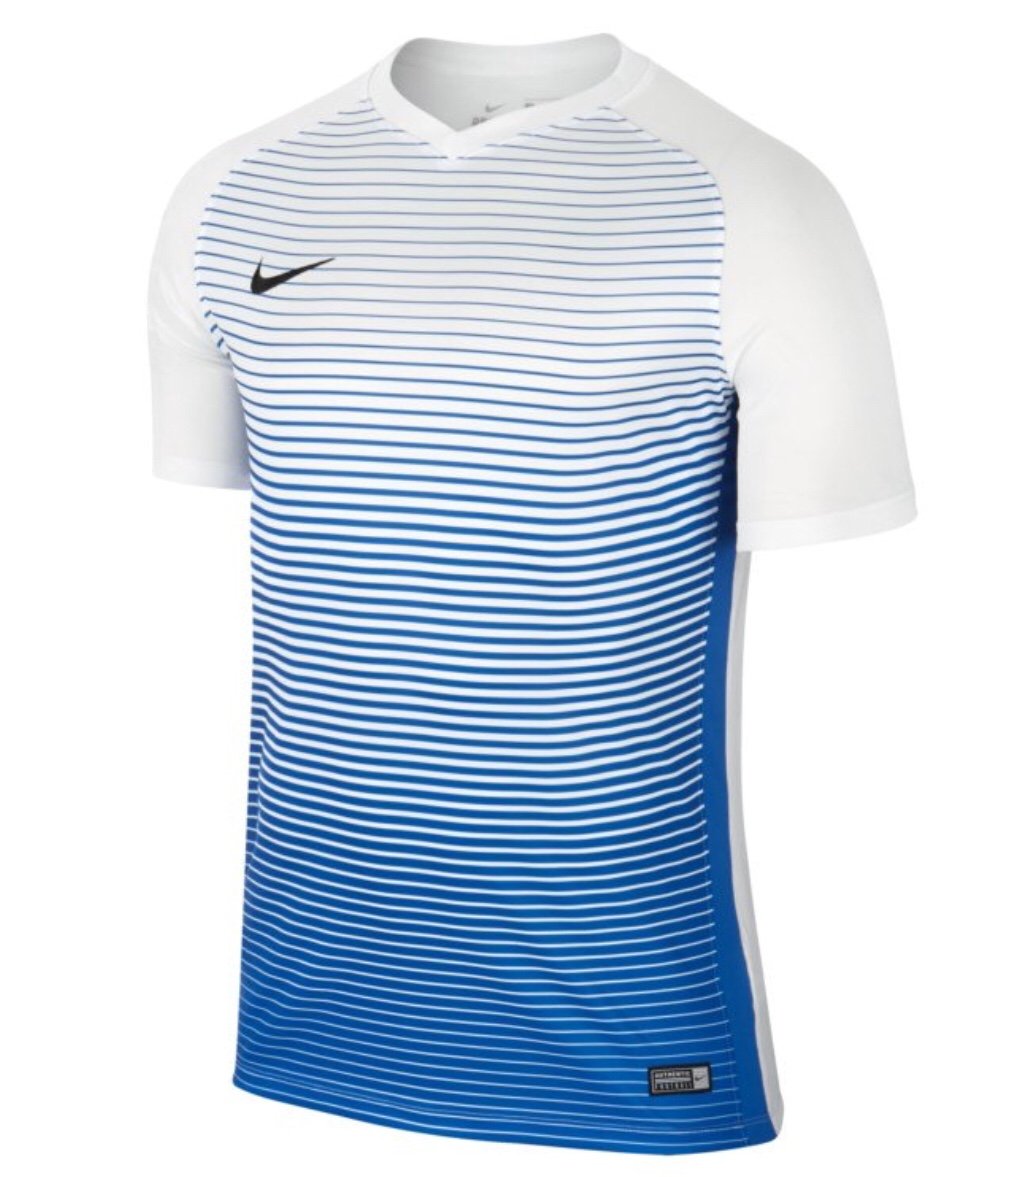 Nike IV Jersey (White/Royal - The Football